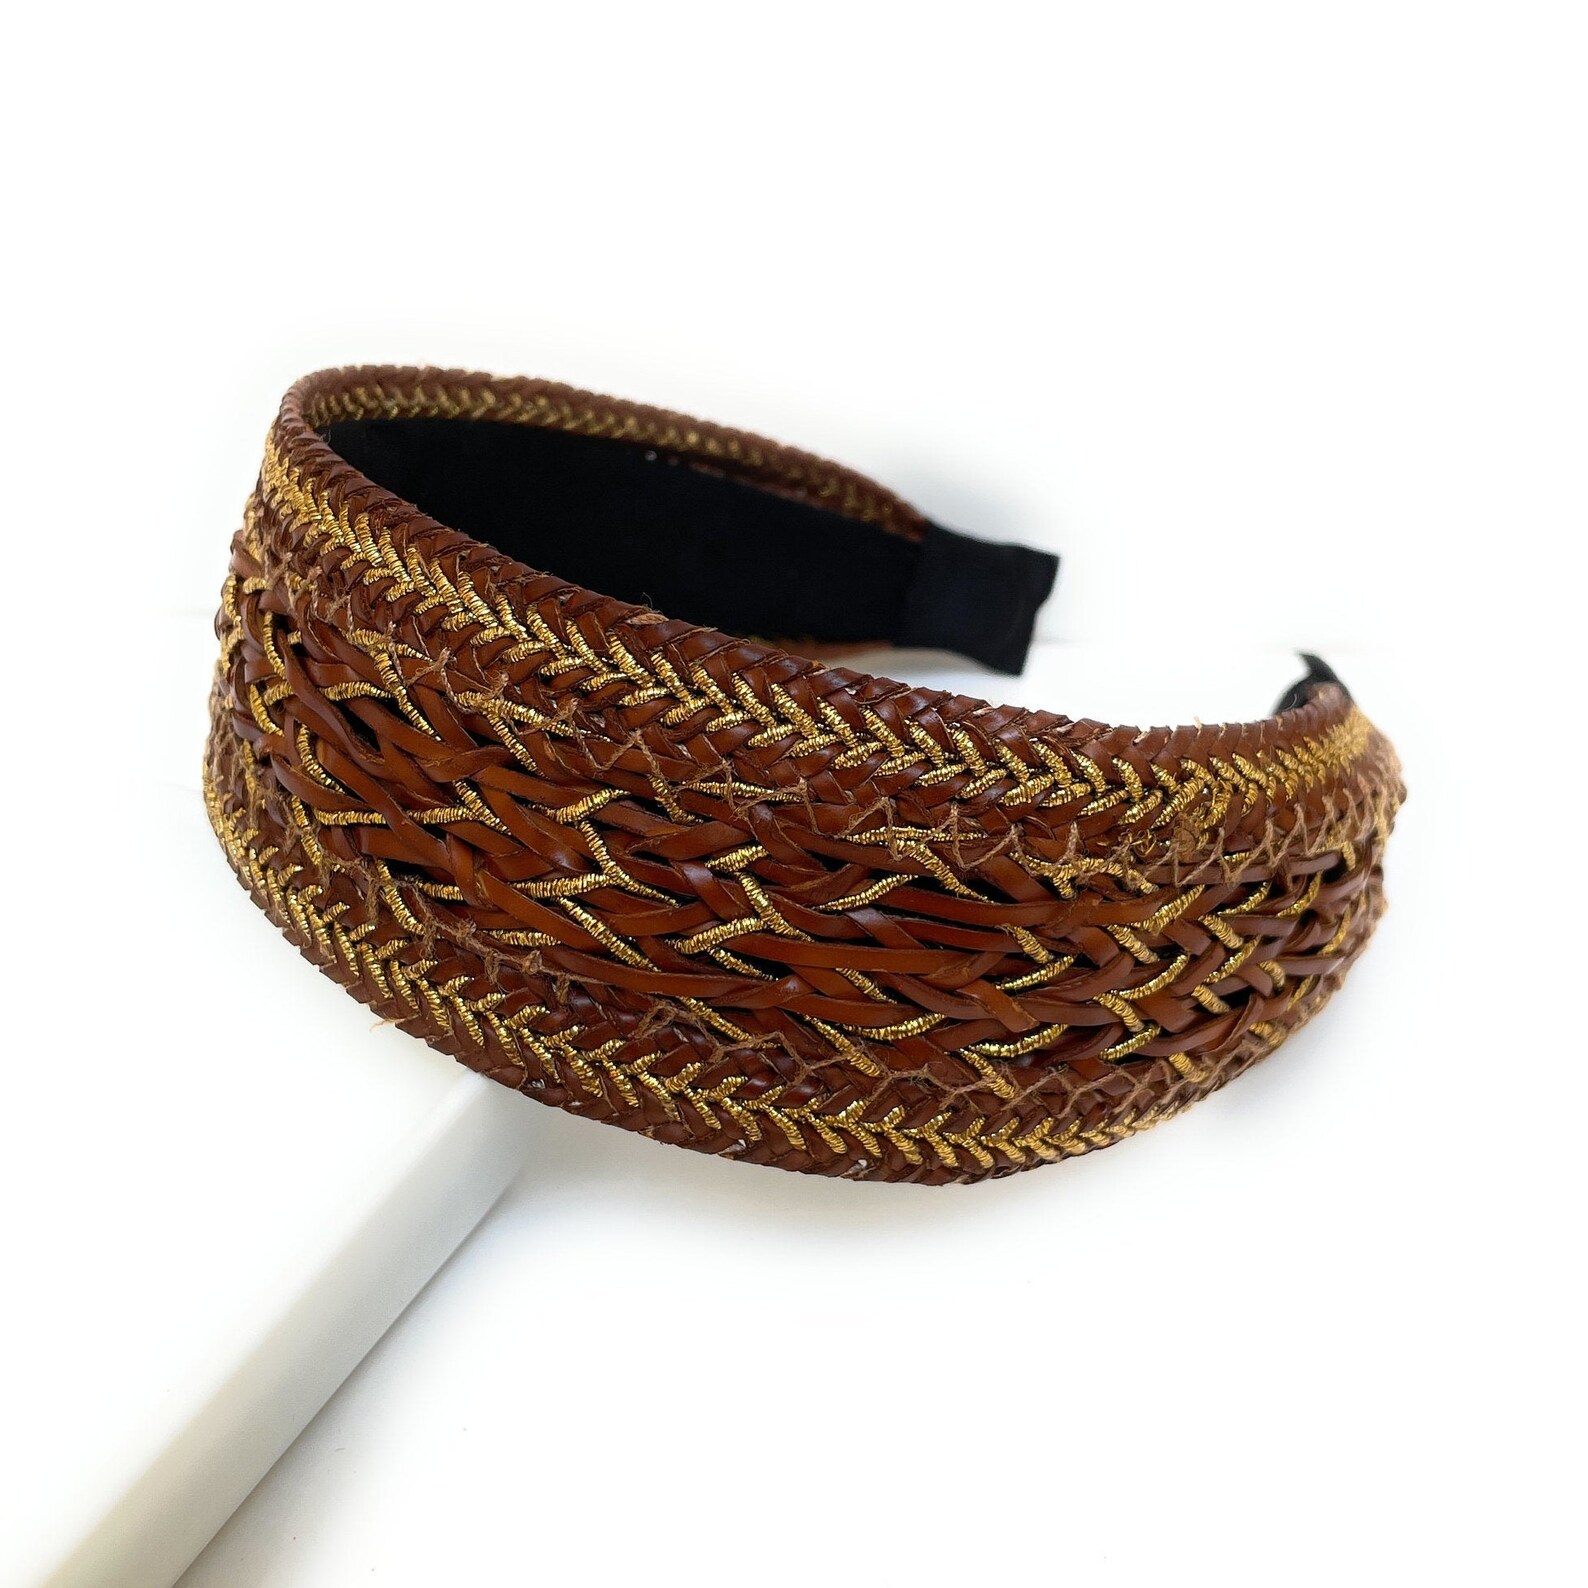 Ethnic Style Headband Grass Braided Headband Wide Boho | Etsy